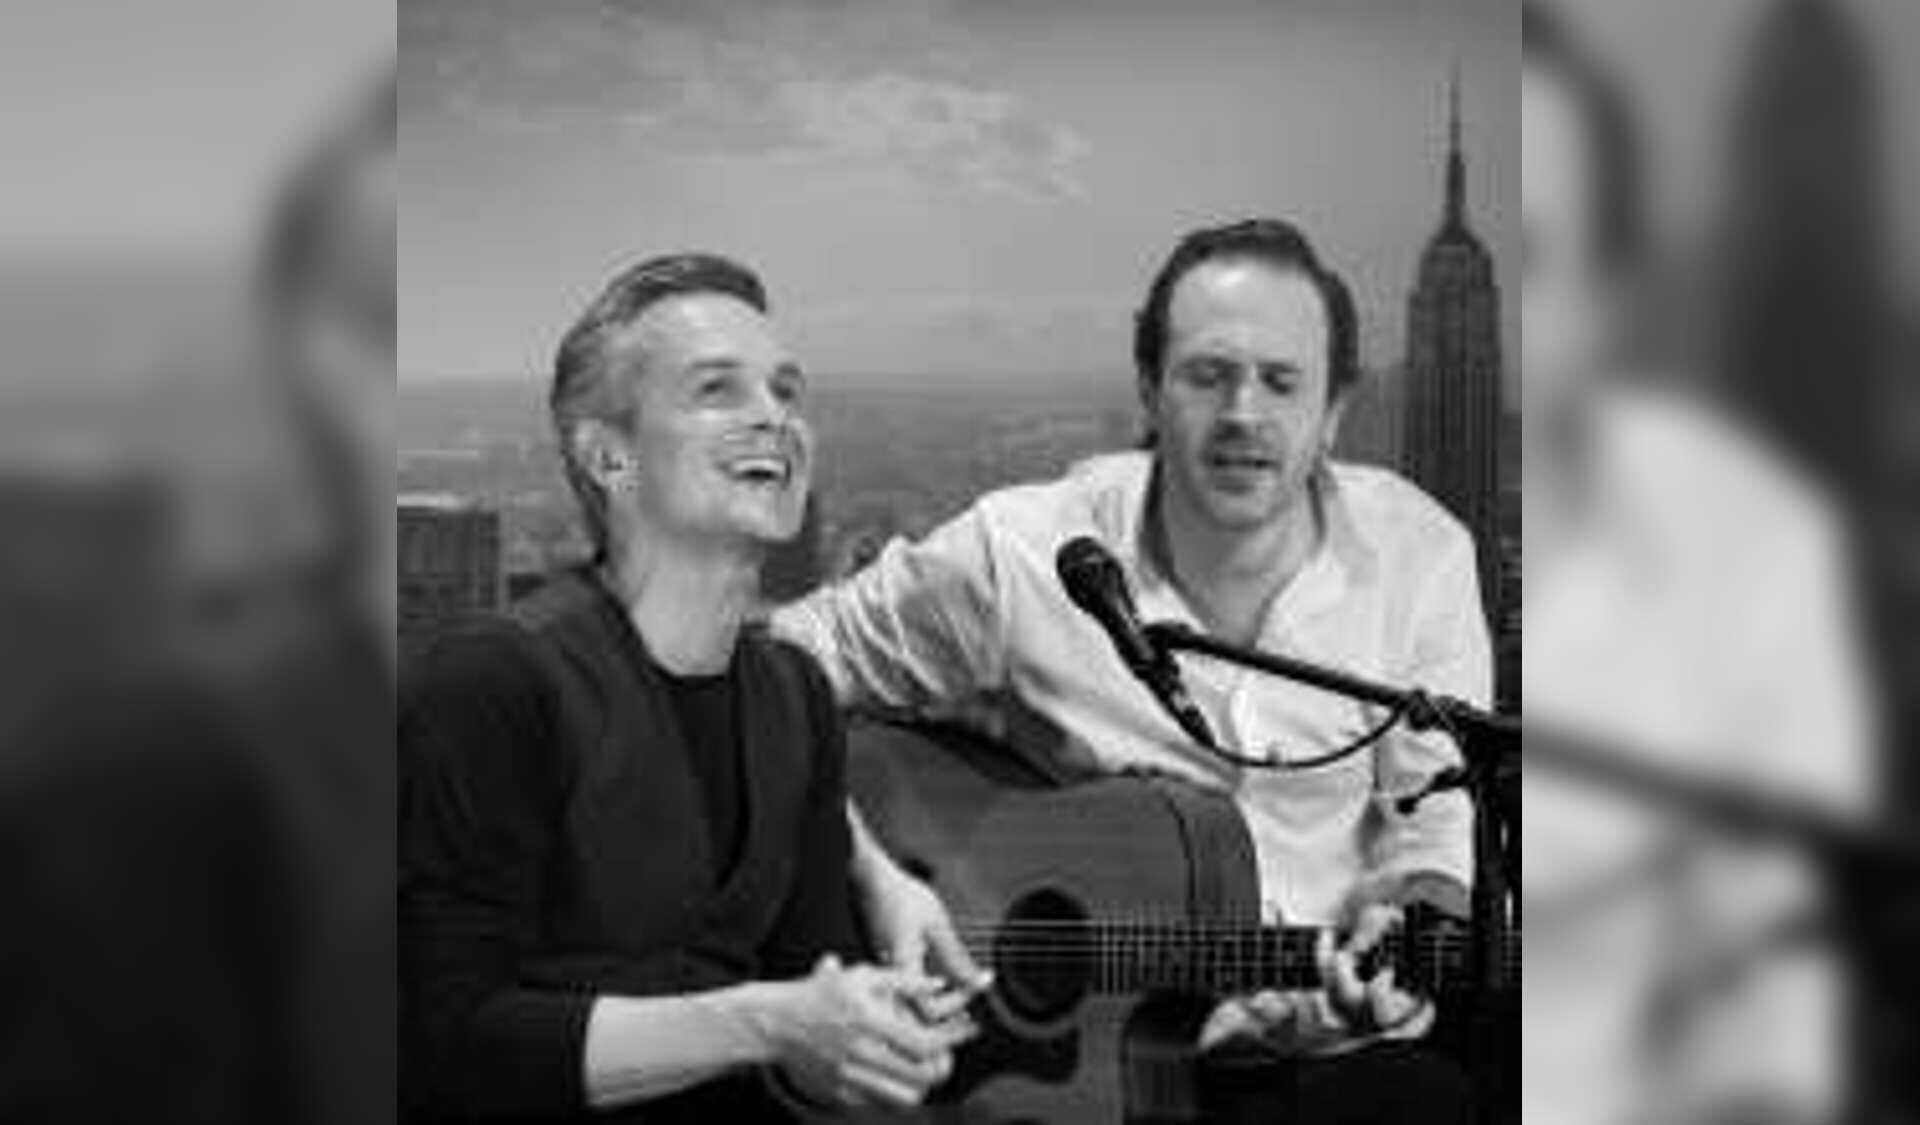 Simon & Garfunkel acoustic